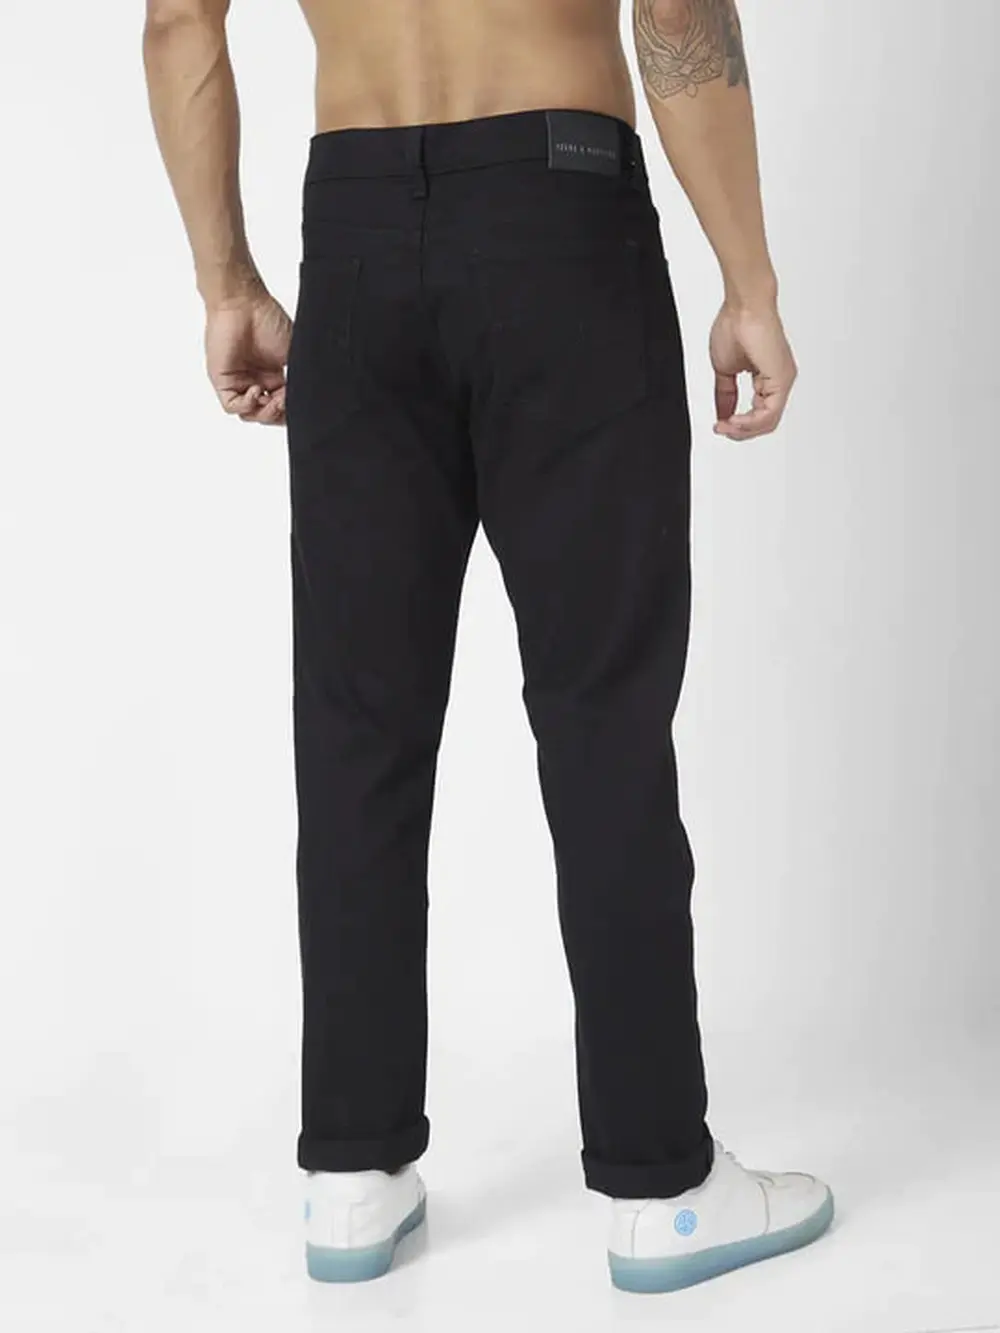 Spykar Men Black Cotton Stretch Slim Fit Narrow Length Clean Look Low Rise Jeans (Skinny)